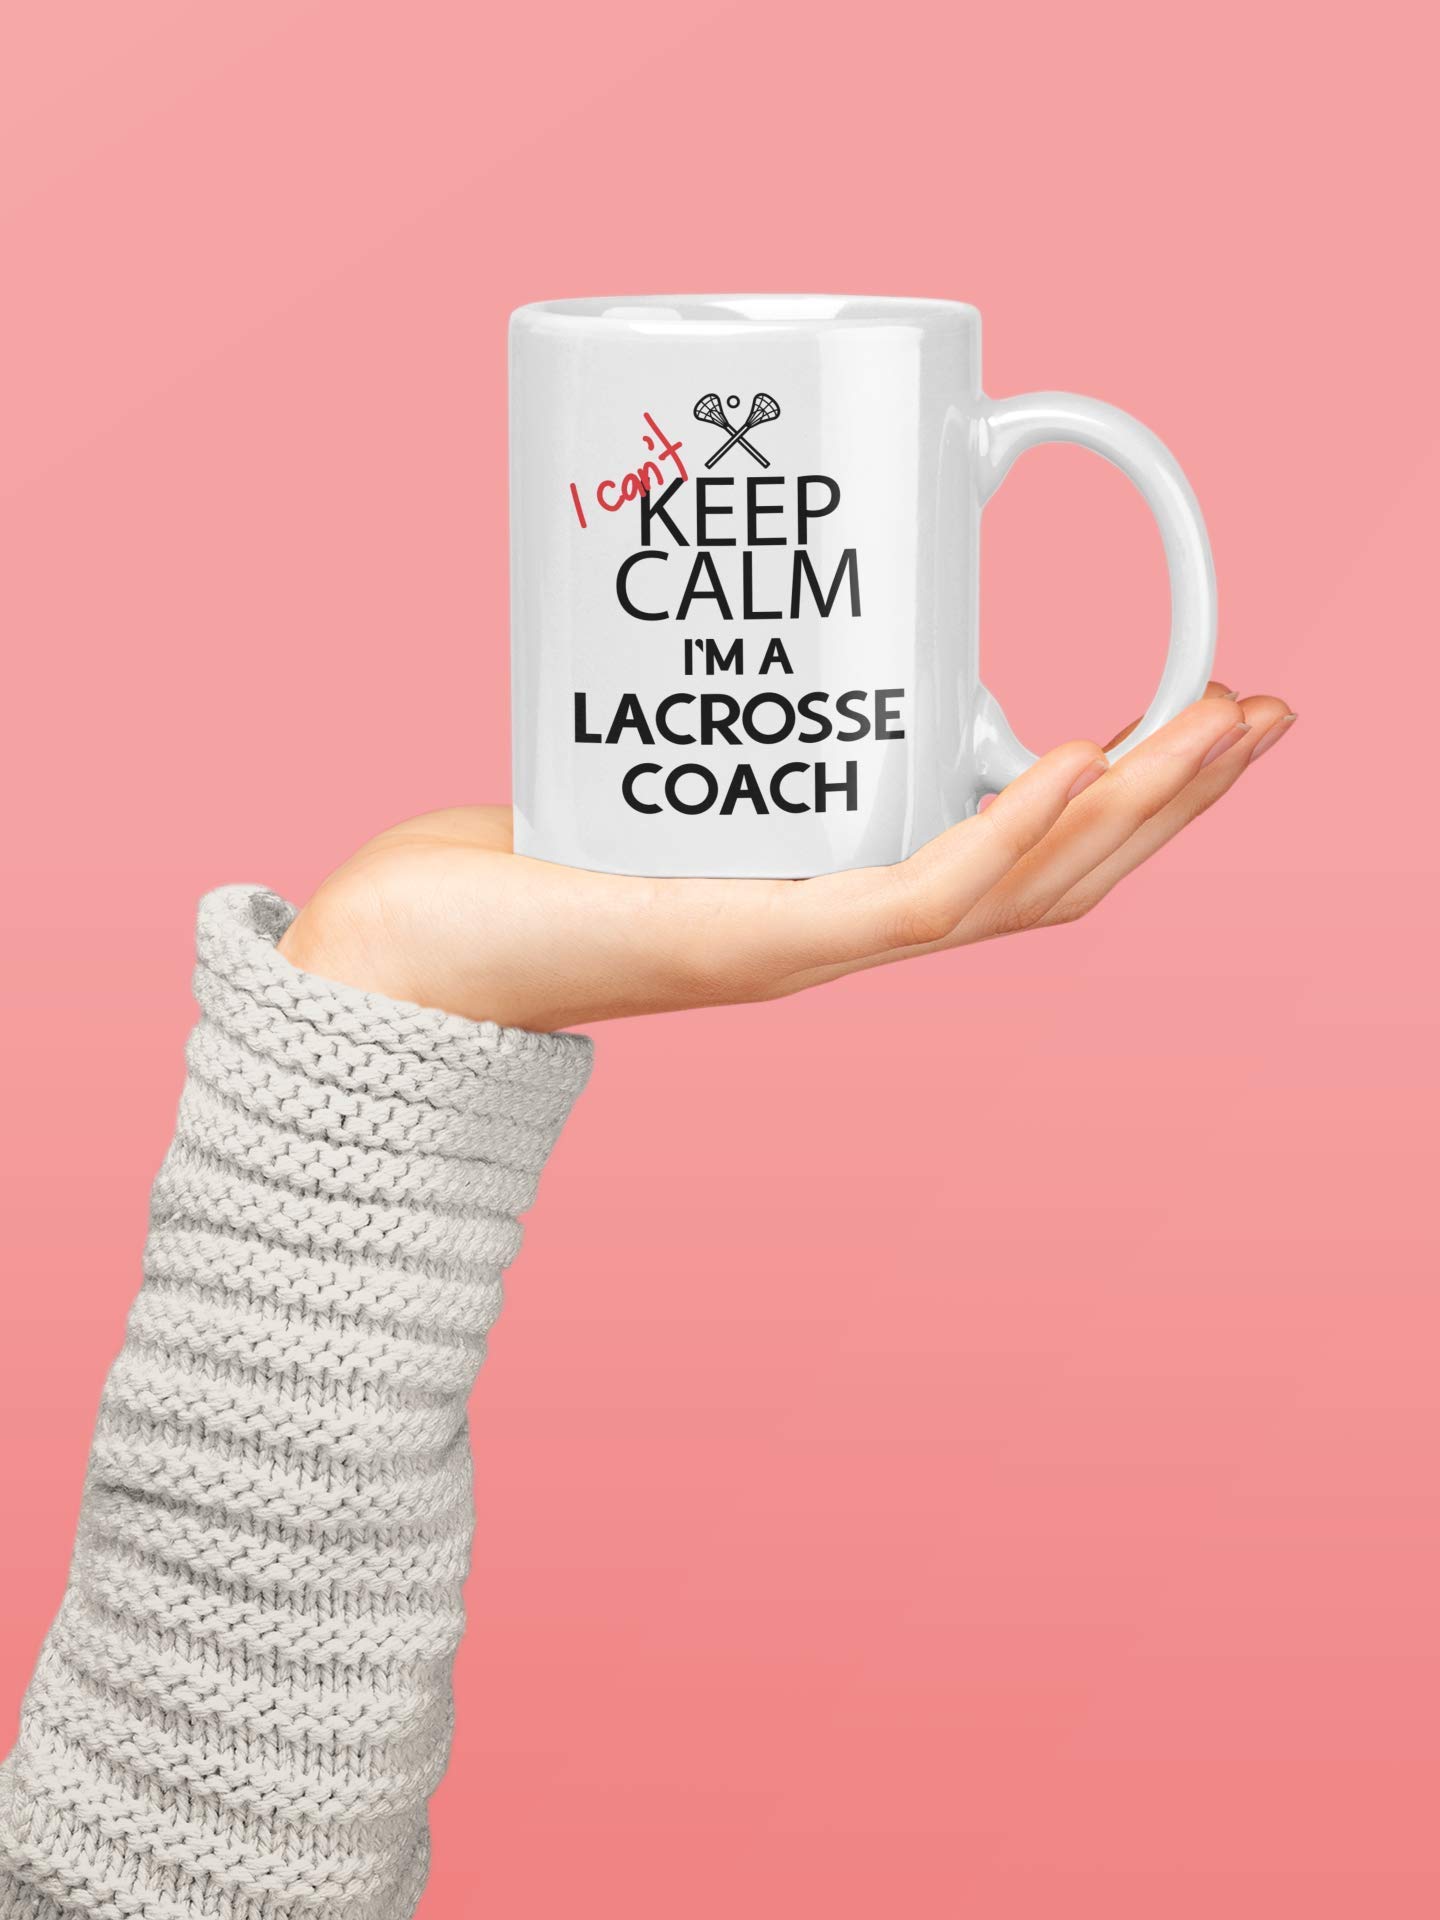 Funny Lacrosse Coach Gifts. I Can't Keep Calm I'm a Lacrosse Coach. 11 oz Coffee Mug. Cup Gift Idea for Coaches or a Teacher.